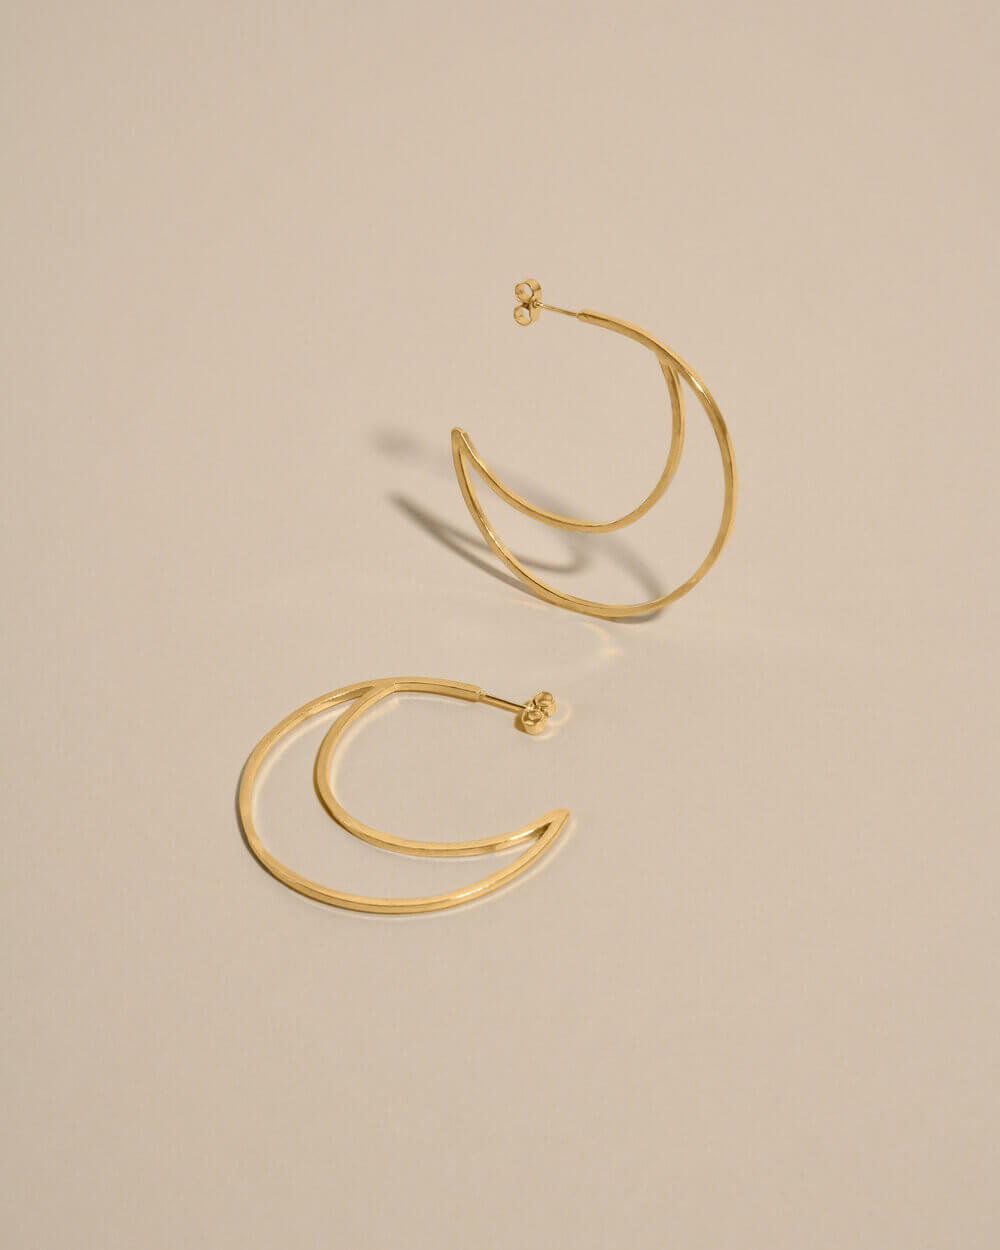 Large Luna Crescent Earrings | Fairmined Gold | by Behind Bracken - Lifestory - Behind Bracken